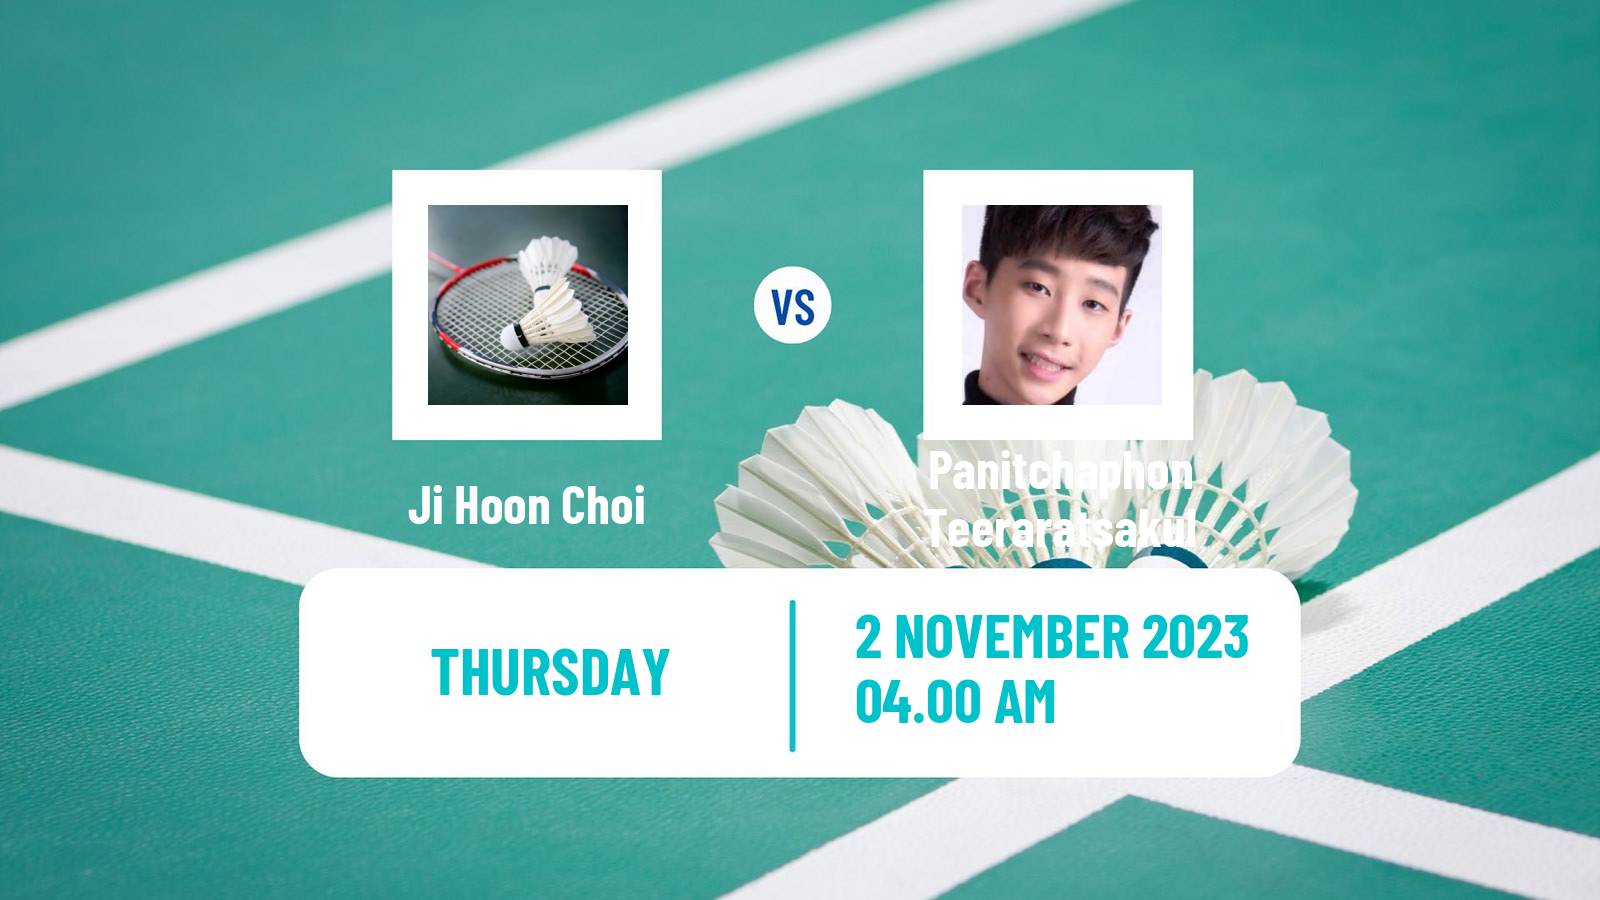 Badminton BWF World Tour Kl Masters Malaysia Super 100 Men Ji Hoon Choi - Panitchaphon Teeraratsakul